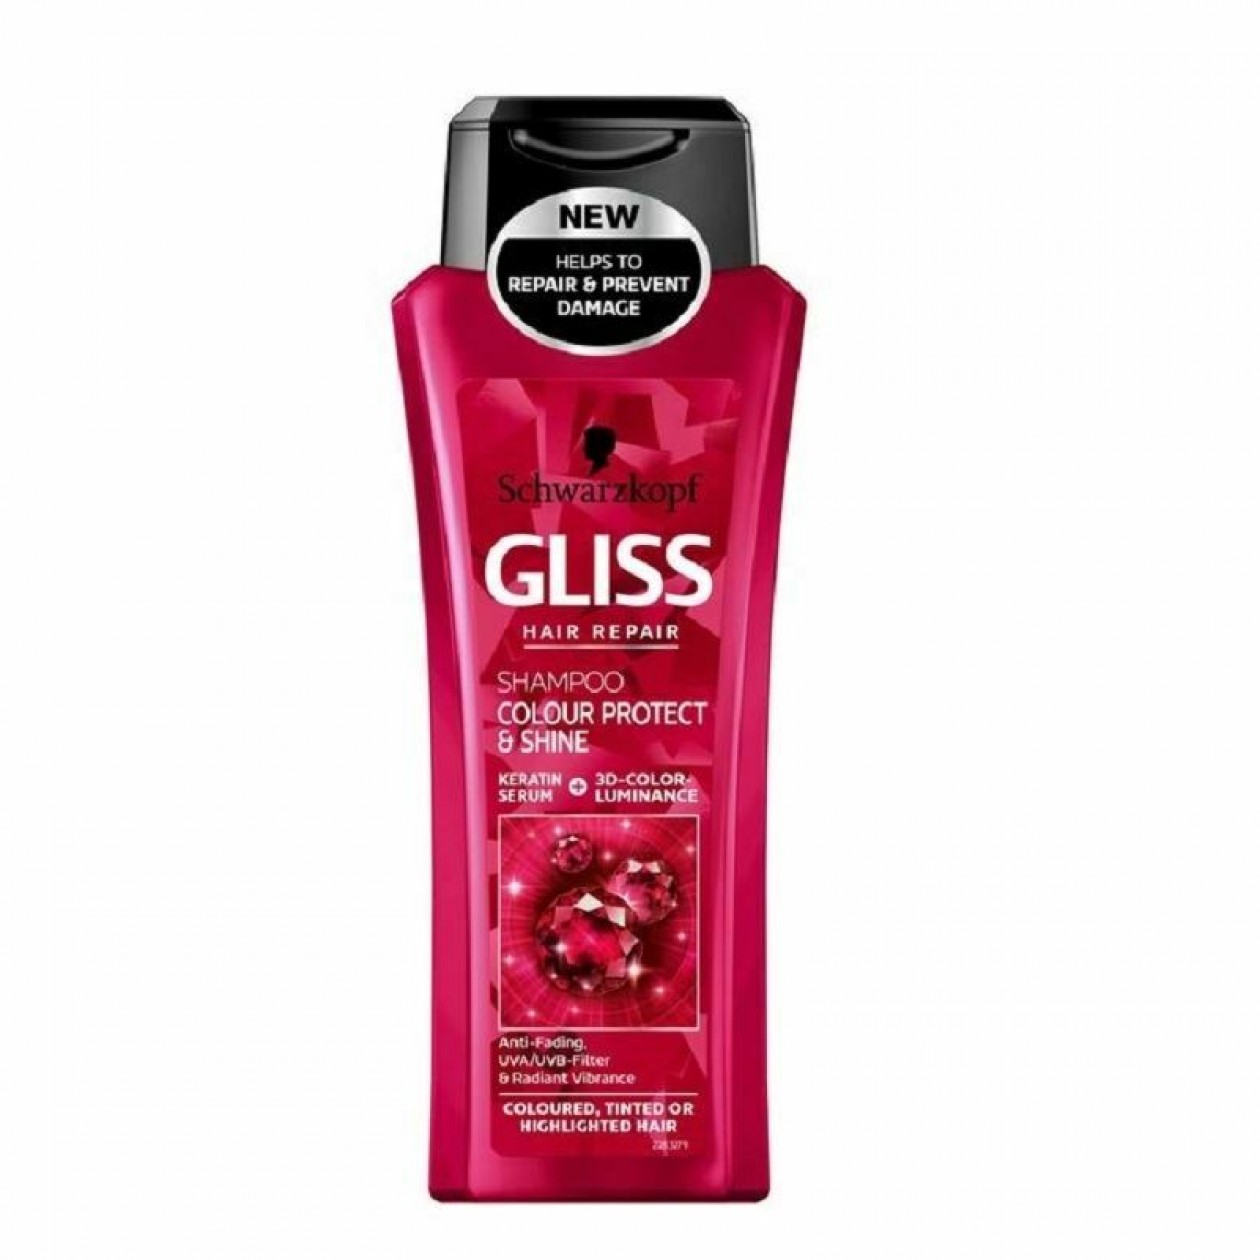 Schwarzkopf Gliss Shampoo Colour Protect & Shine 200ml